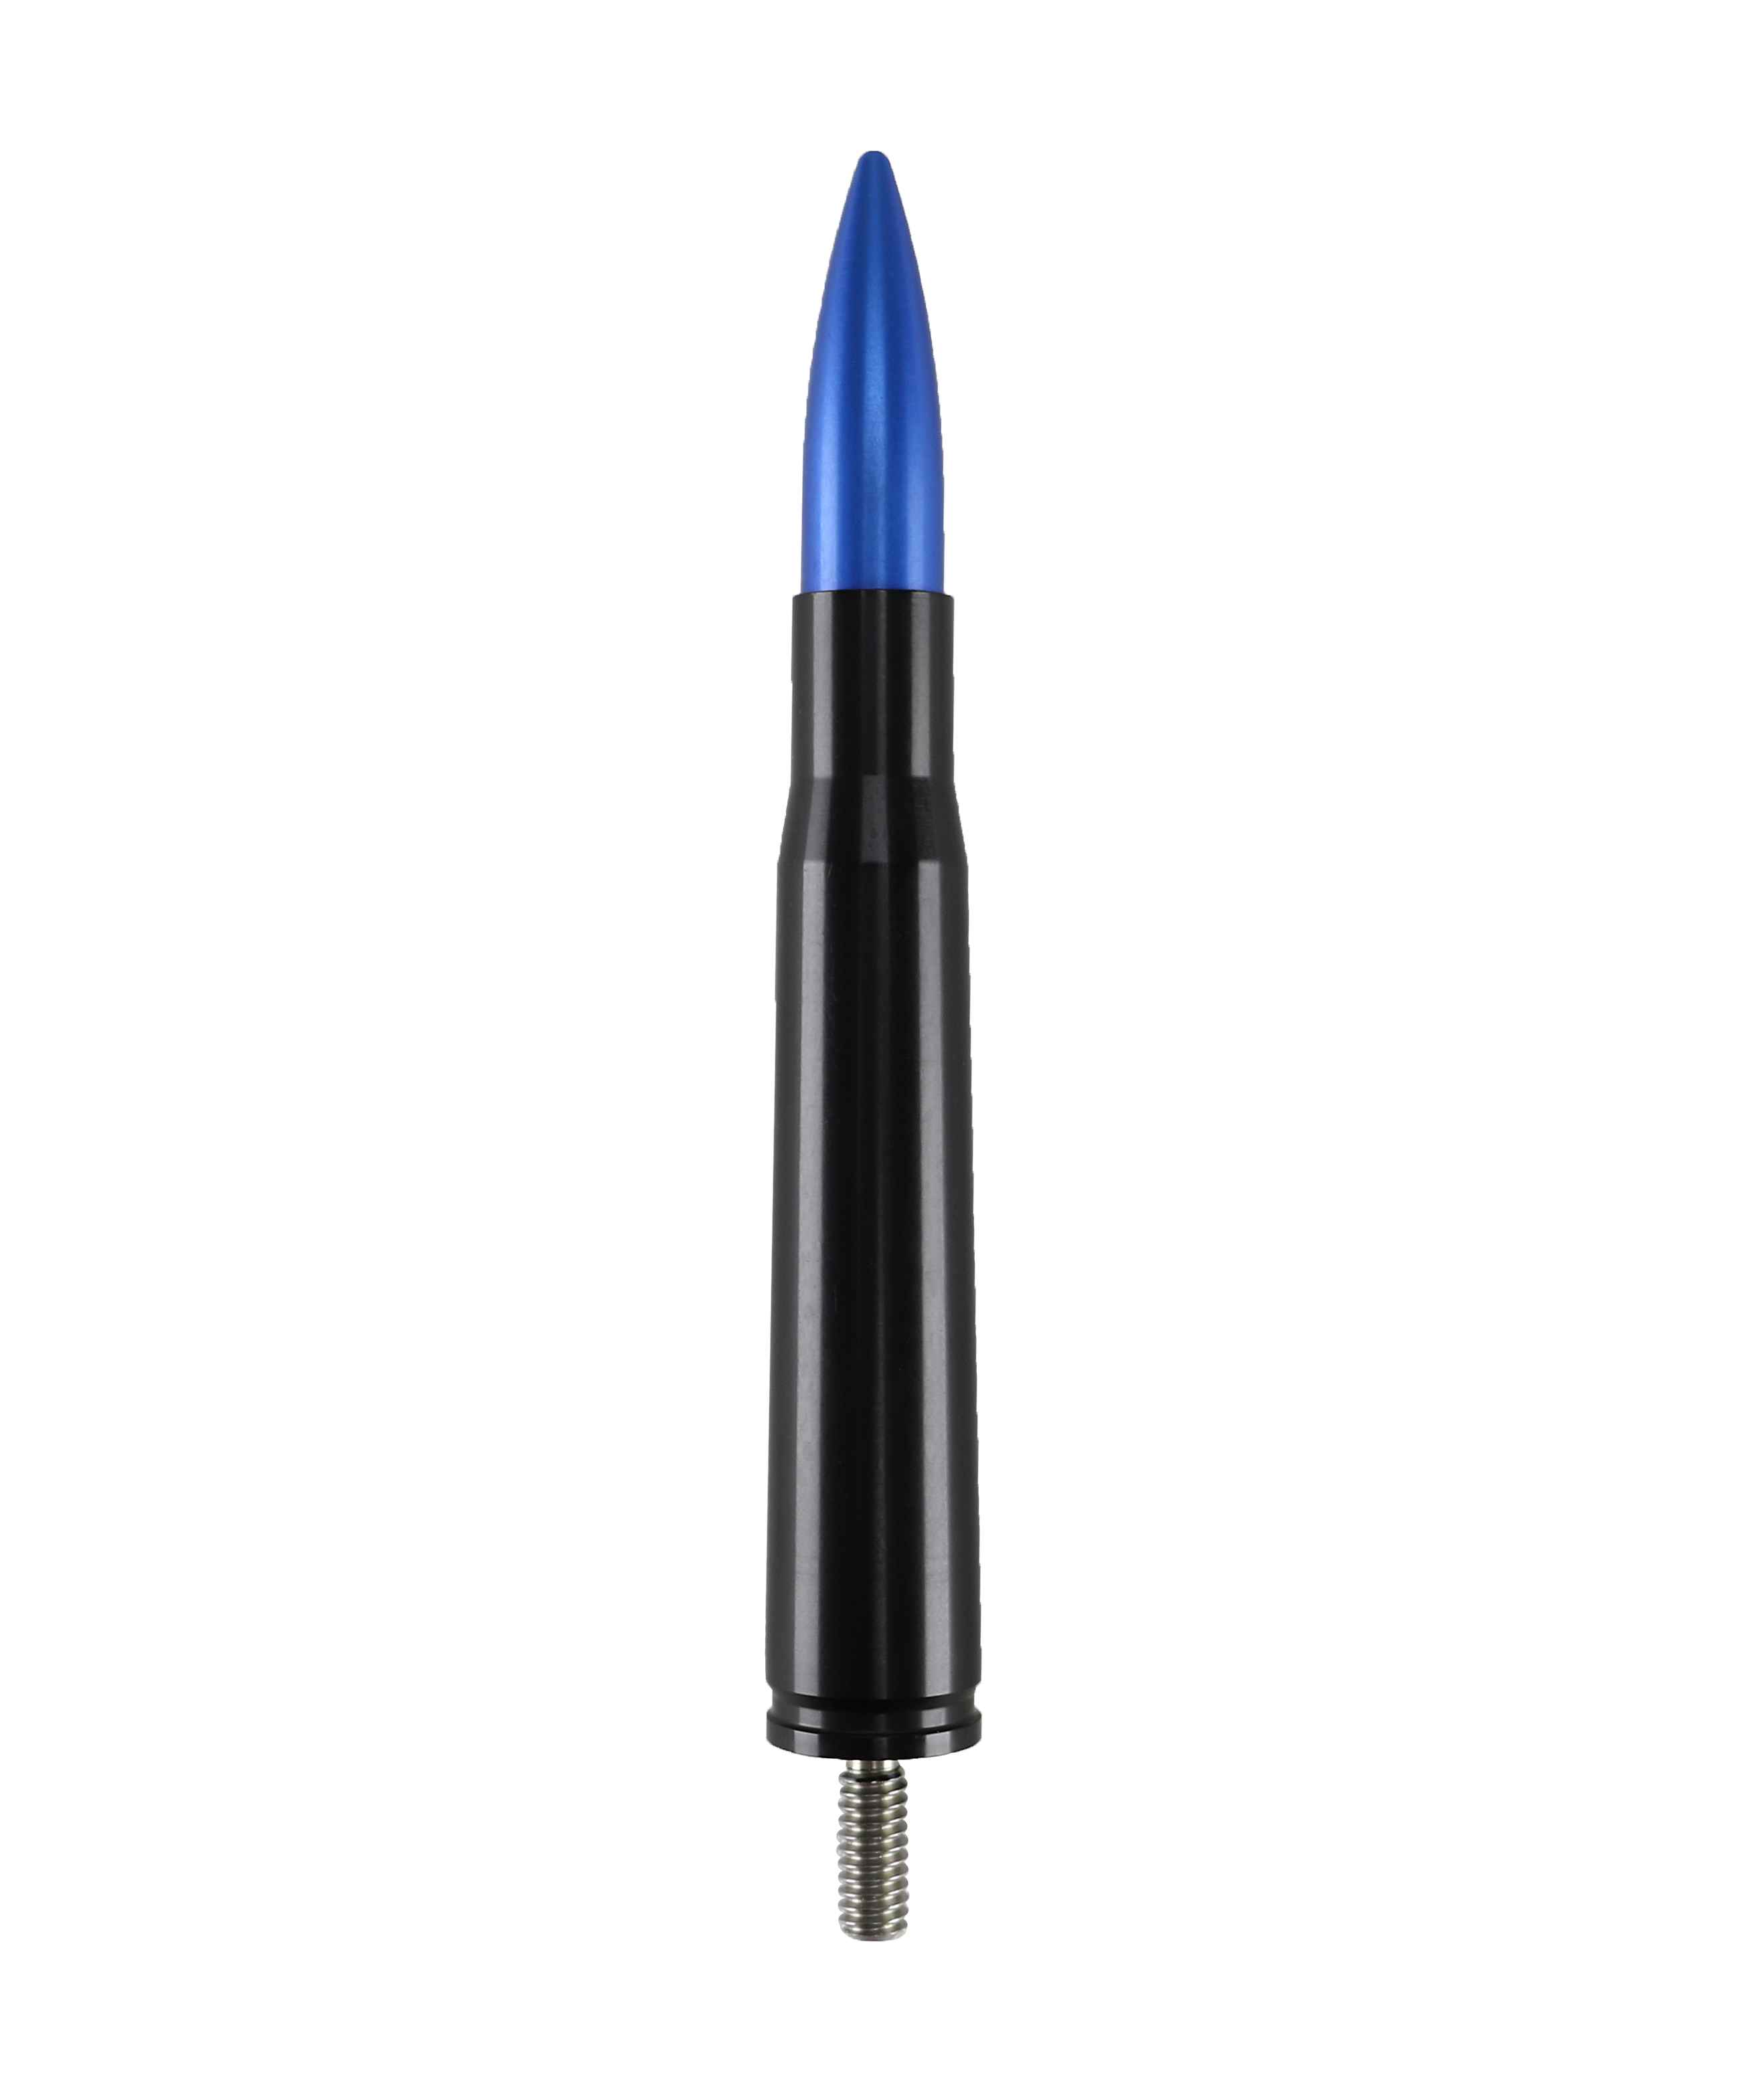 Votex - Made in USA - BLUE 50 Caliber Bullet Aluminum Antenna - Part Number A435-BLUE-6M